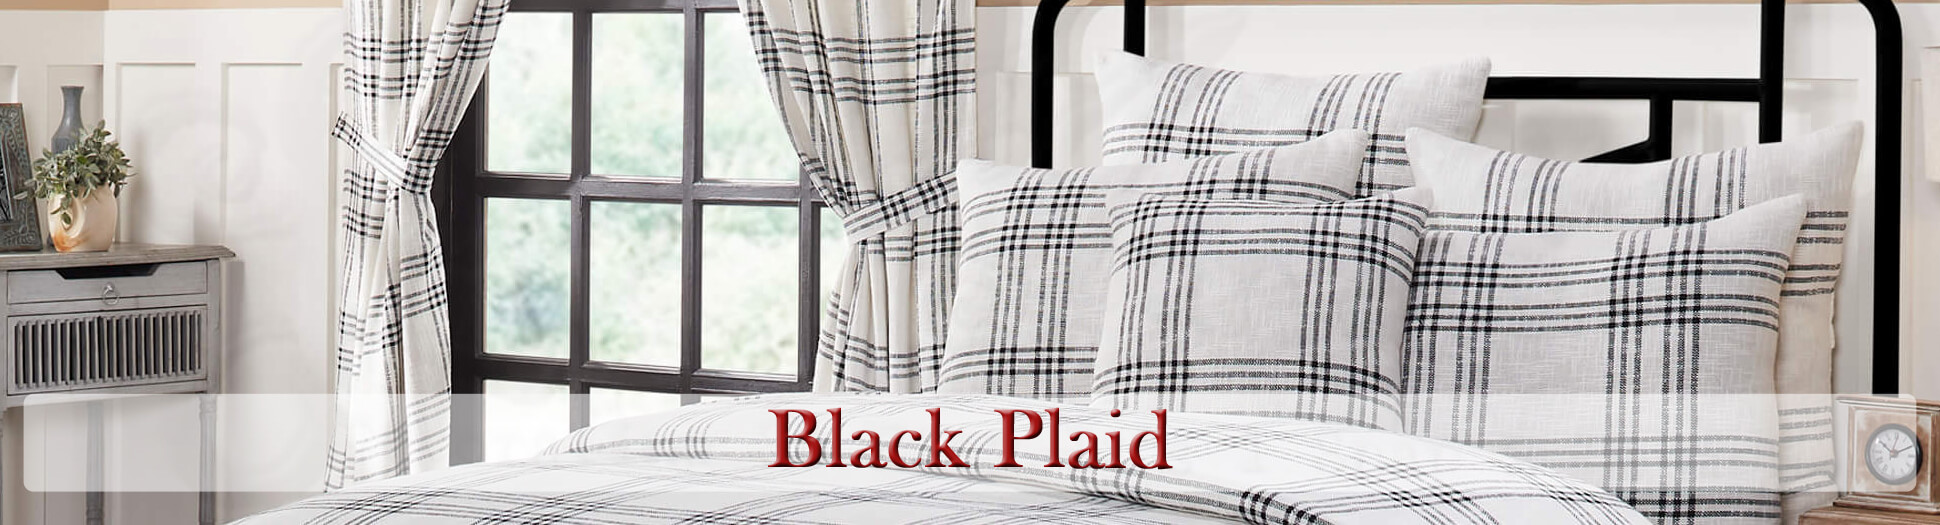 Shop Black Plaid by VHC Brands